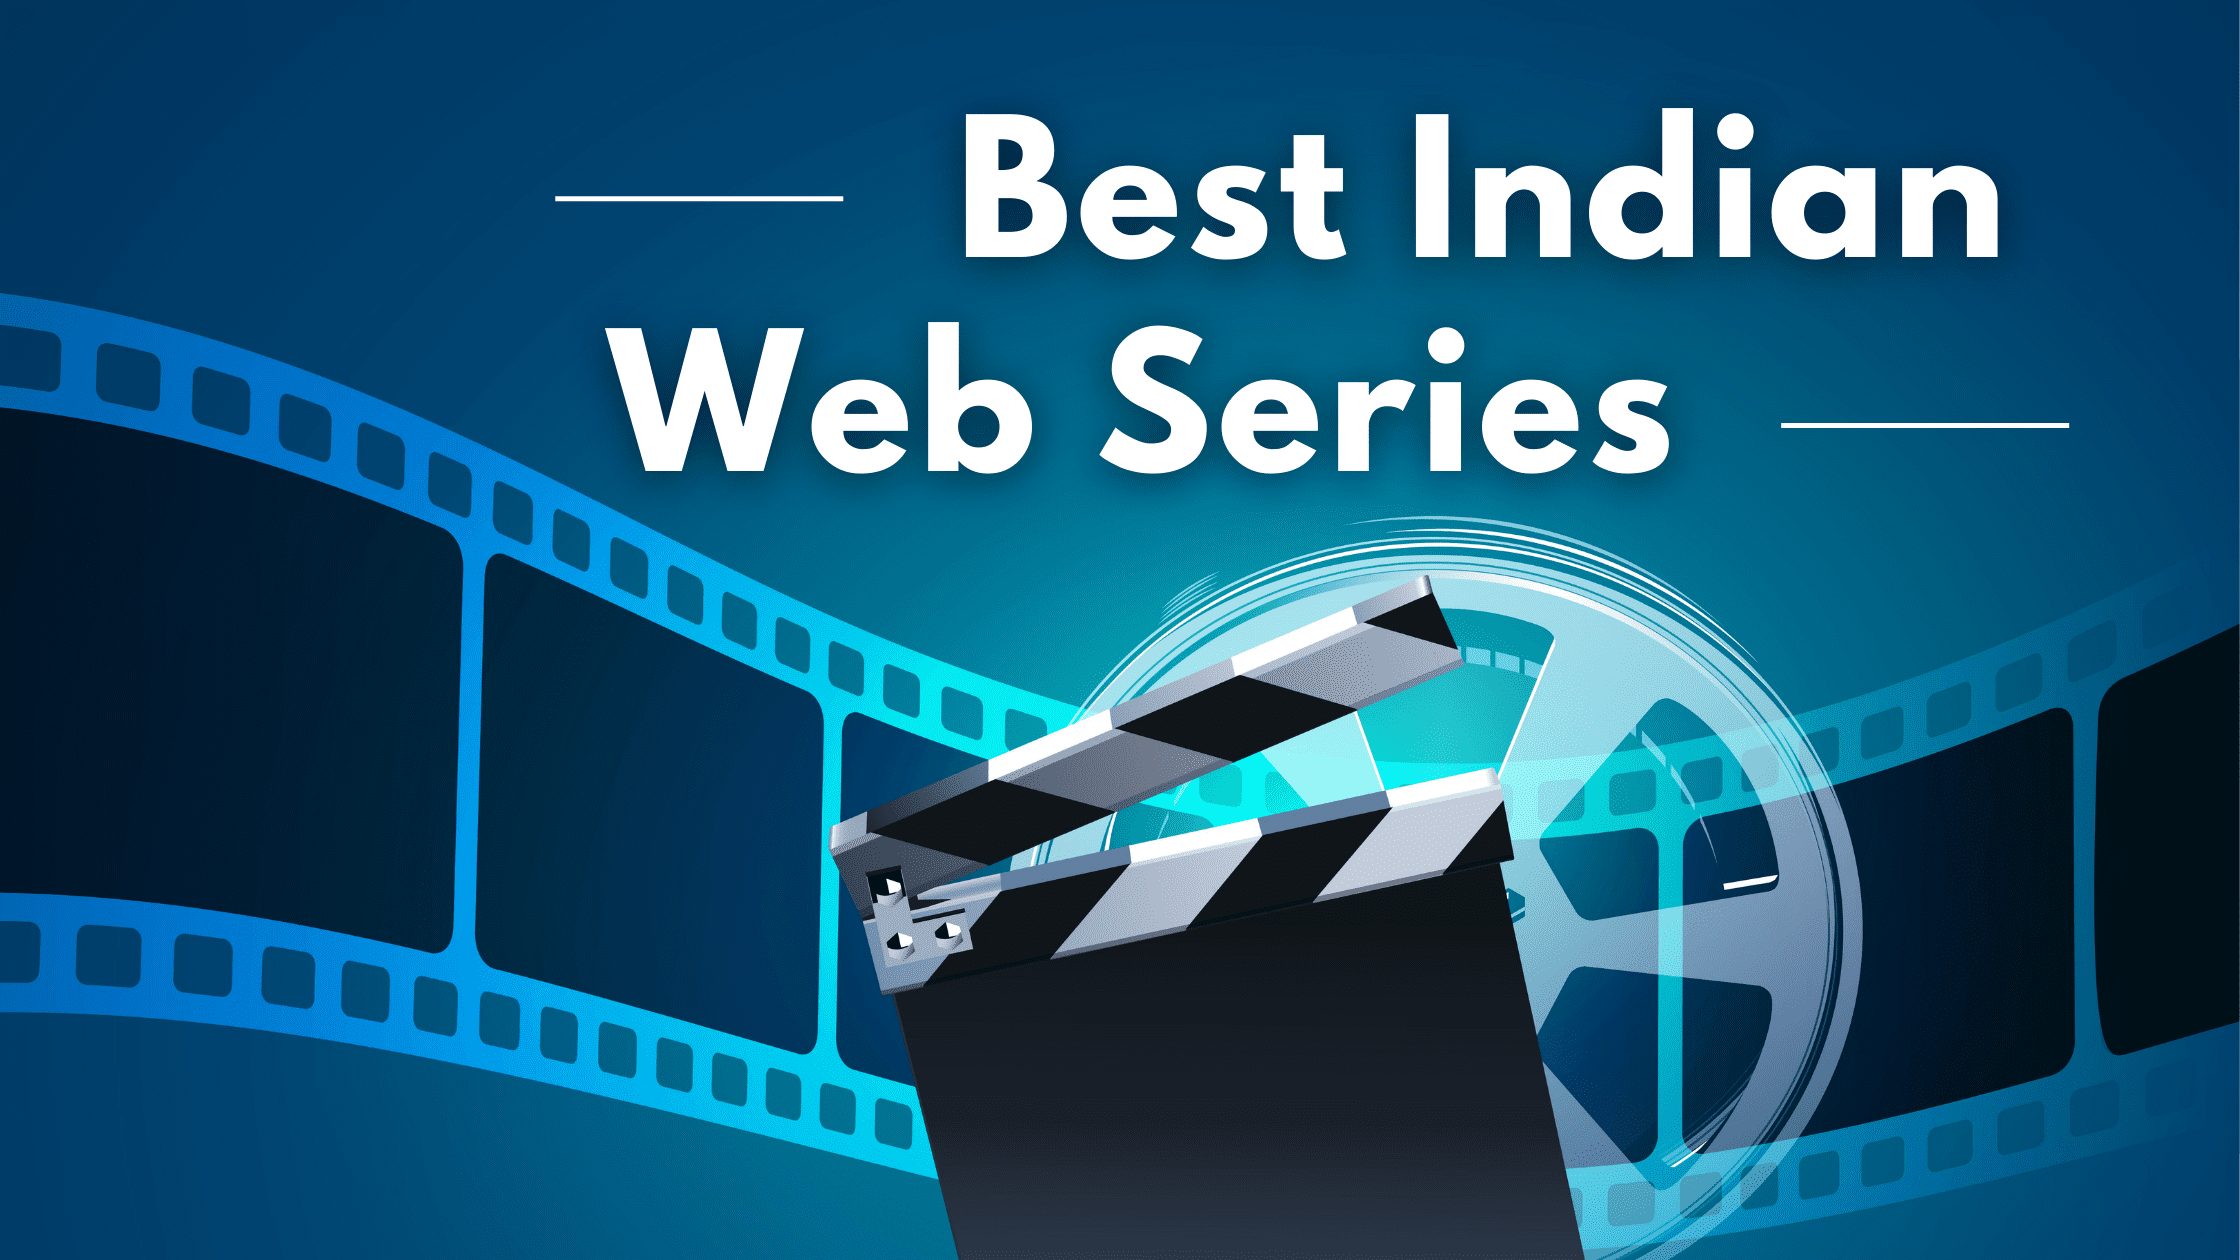 Leena Jumani Ke Chudai Ke Xxx Photos - 77 Best Indian Web Series On Netflix, Prime or More (2023)